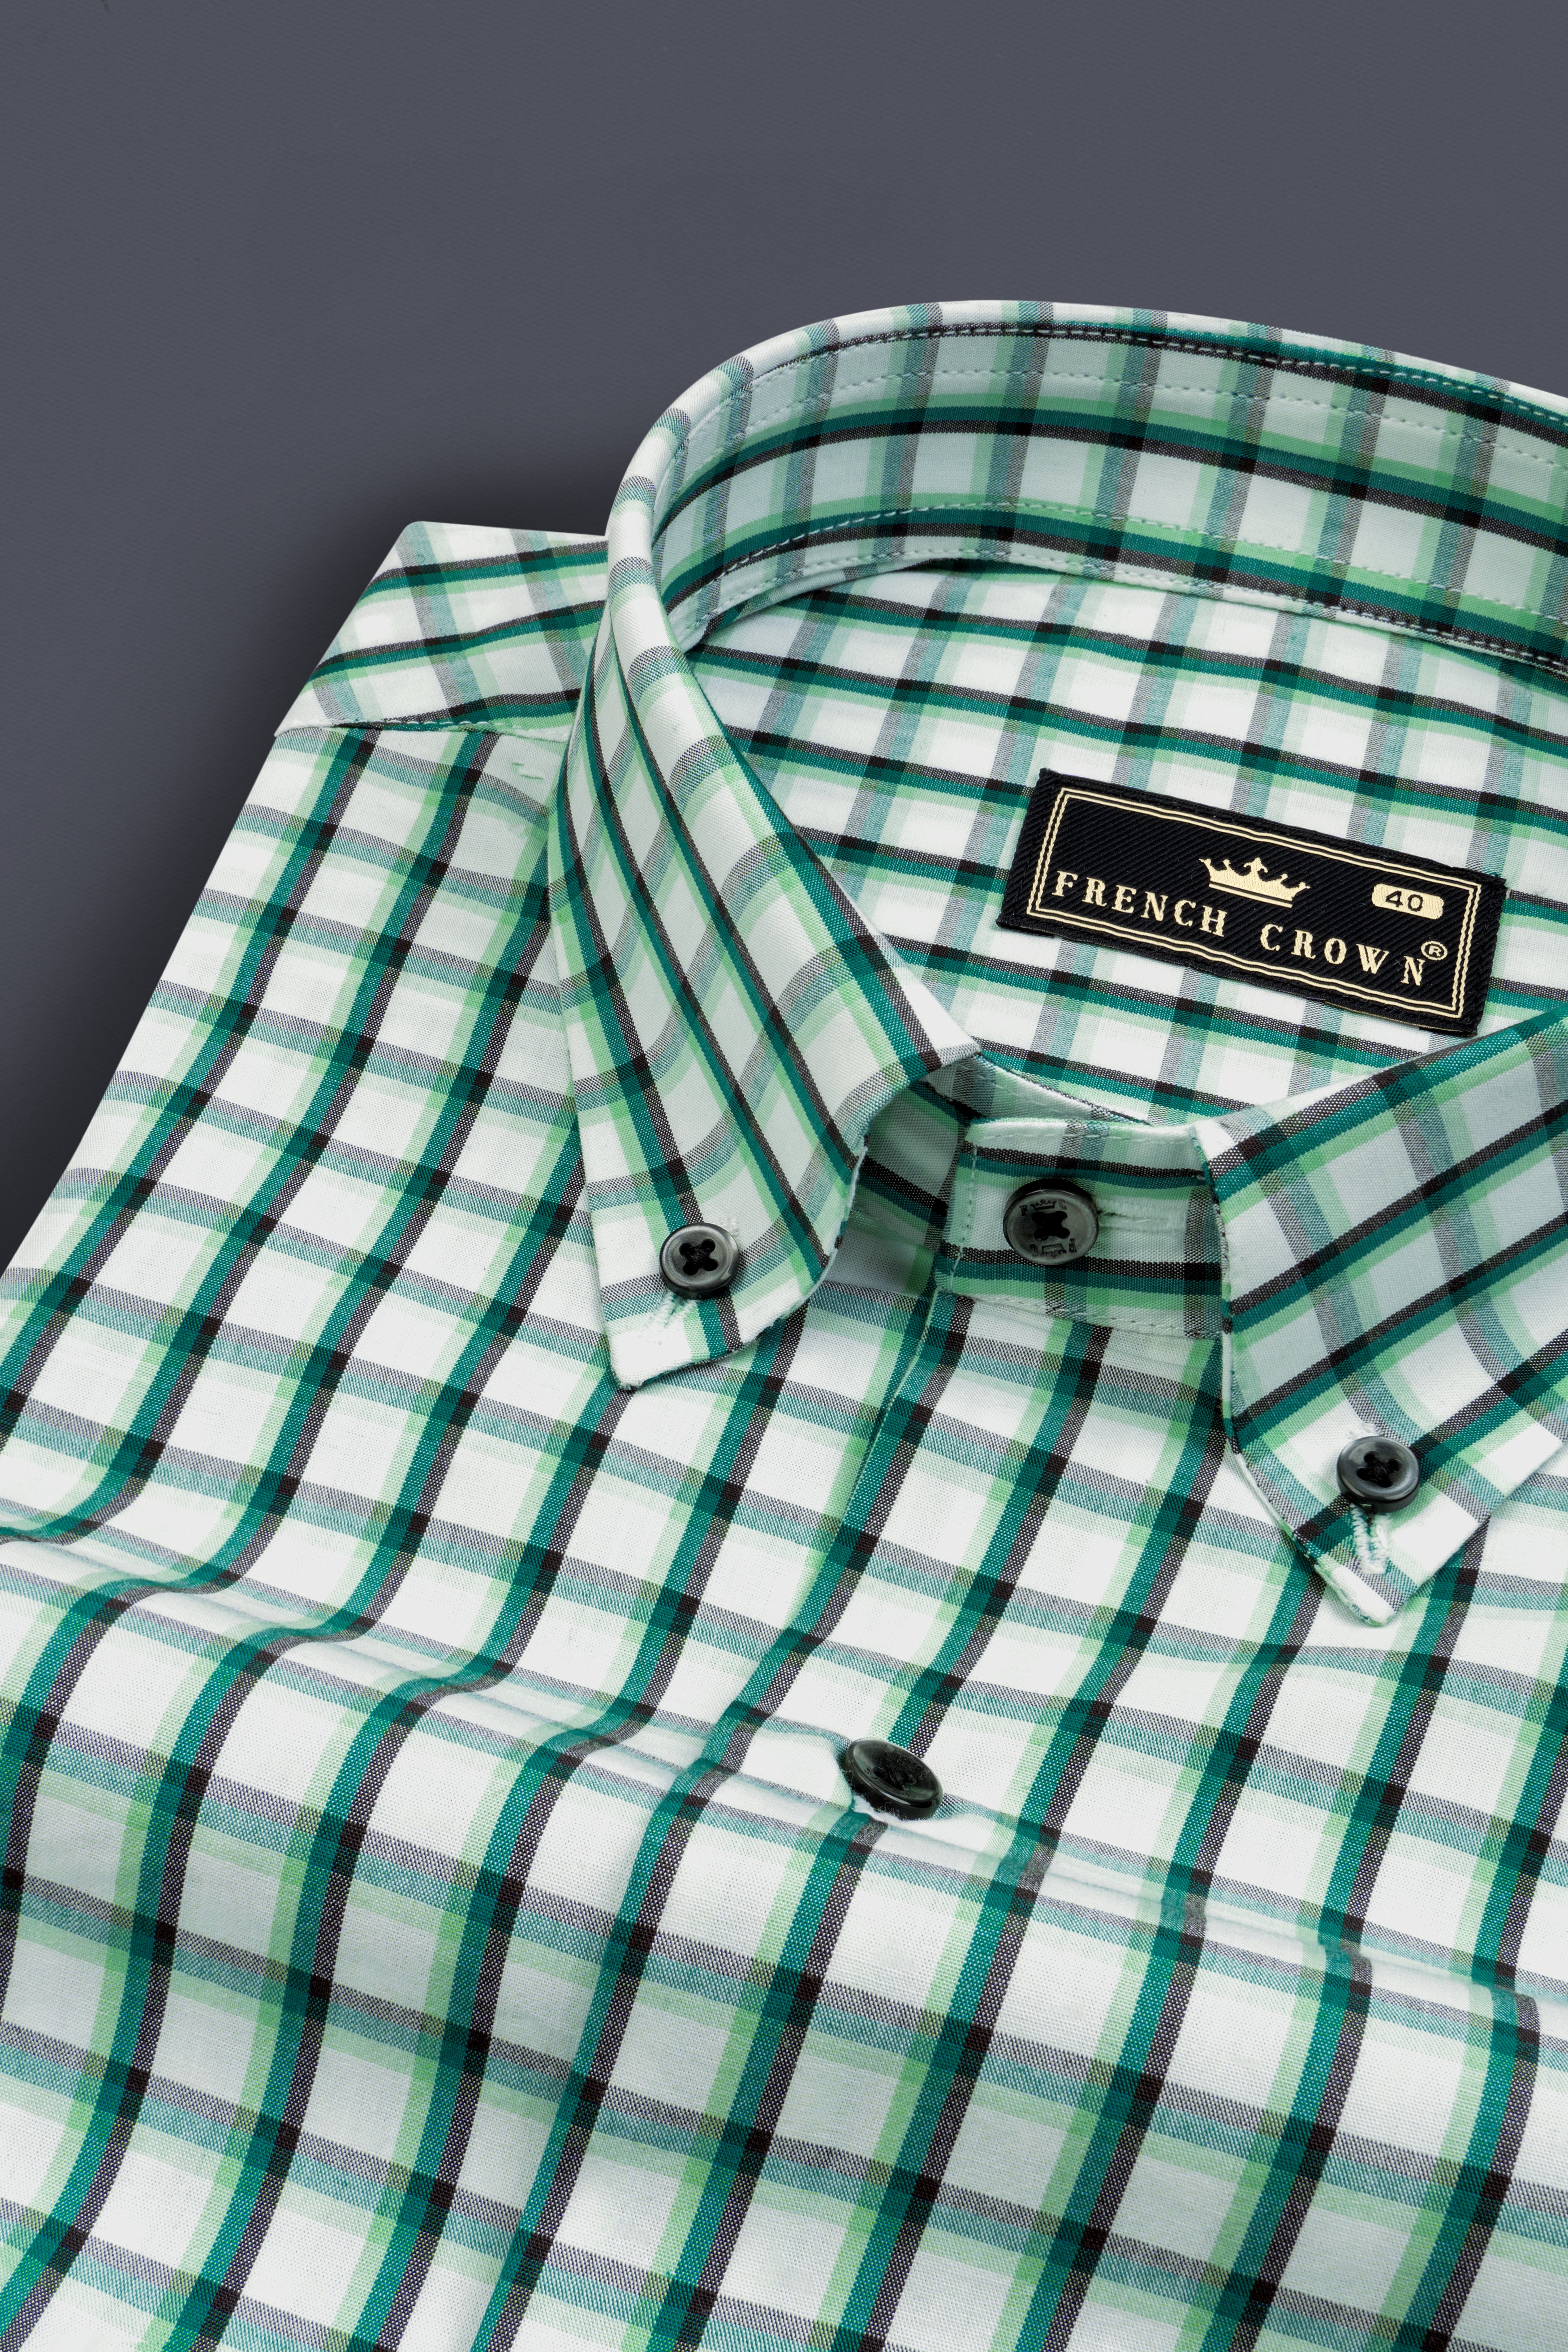 Observatory Green windowpane Premium Oxford Shirt